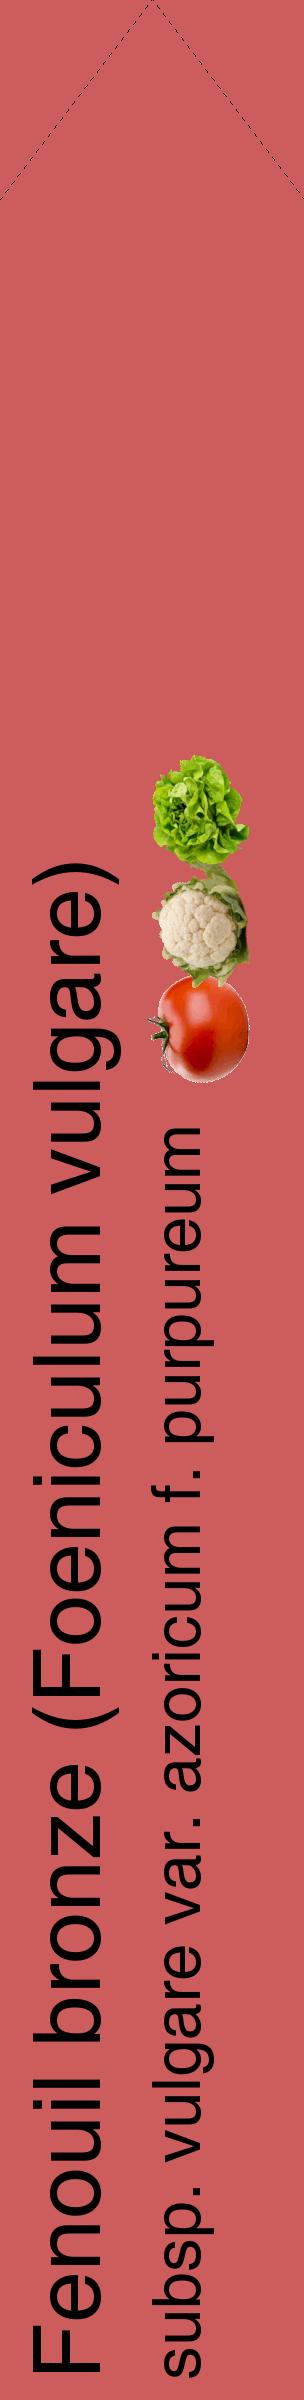 Étiquette de : Foeniculum vulgare subsp. vulgare var. azoricum f. purpureum - format c - style noire35_simplehel avec comestibilité simplifiée